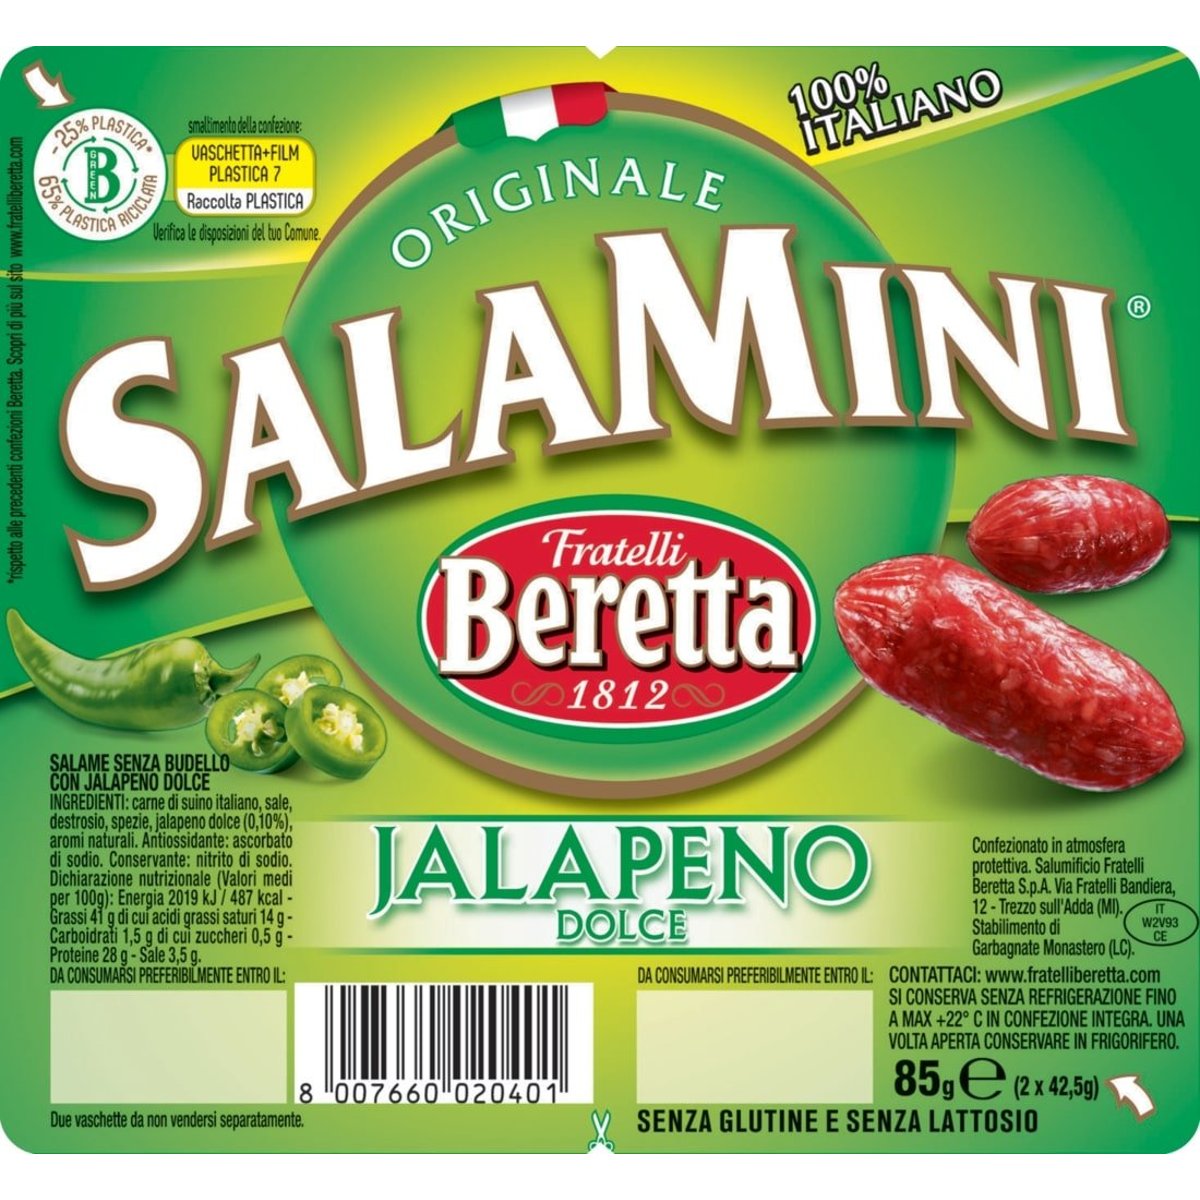 Fratelli Beretta Salamini Jalapeno